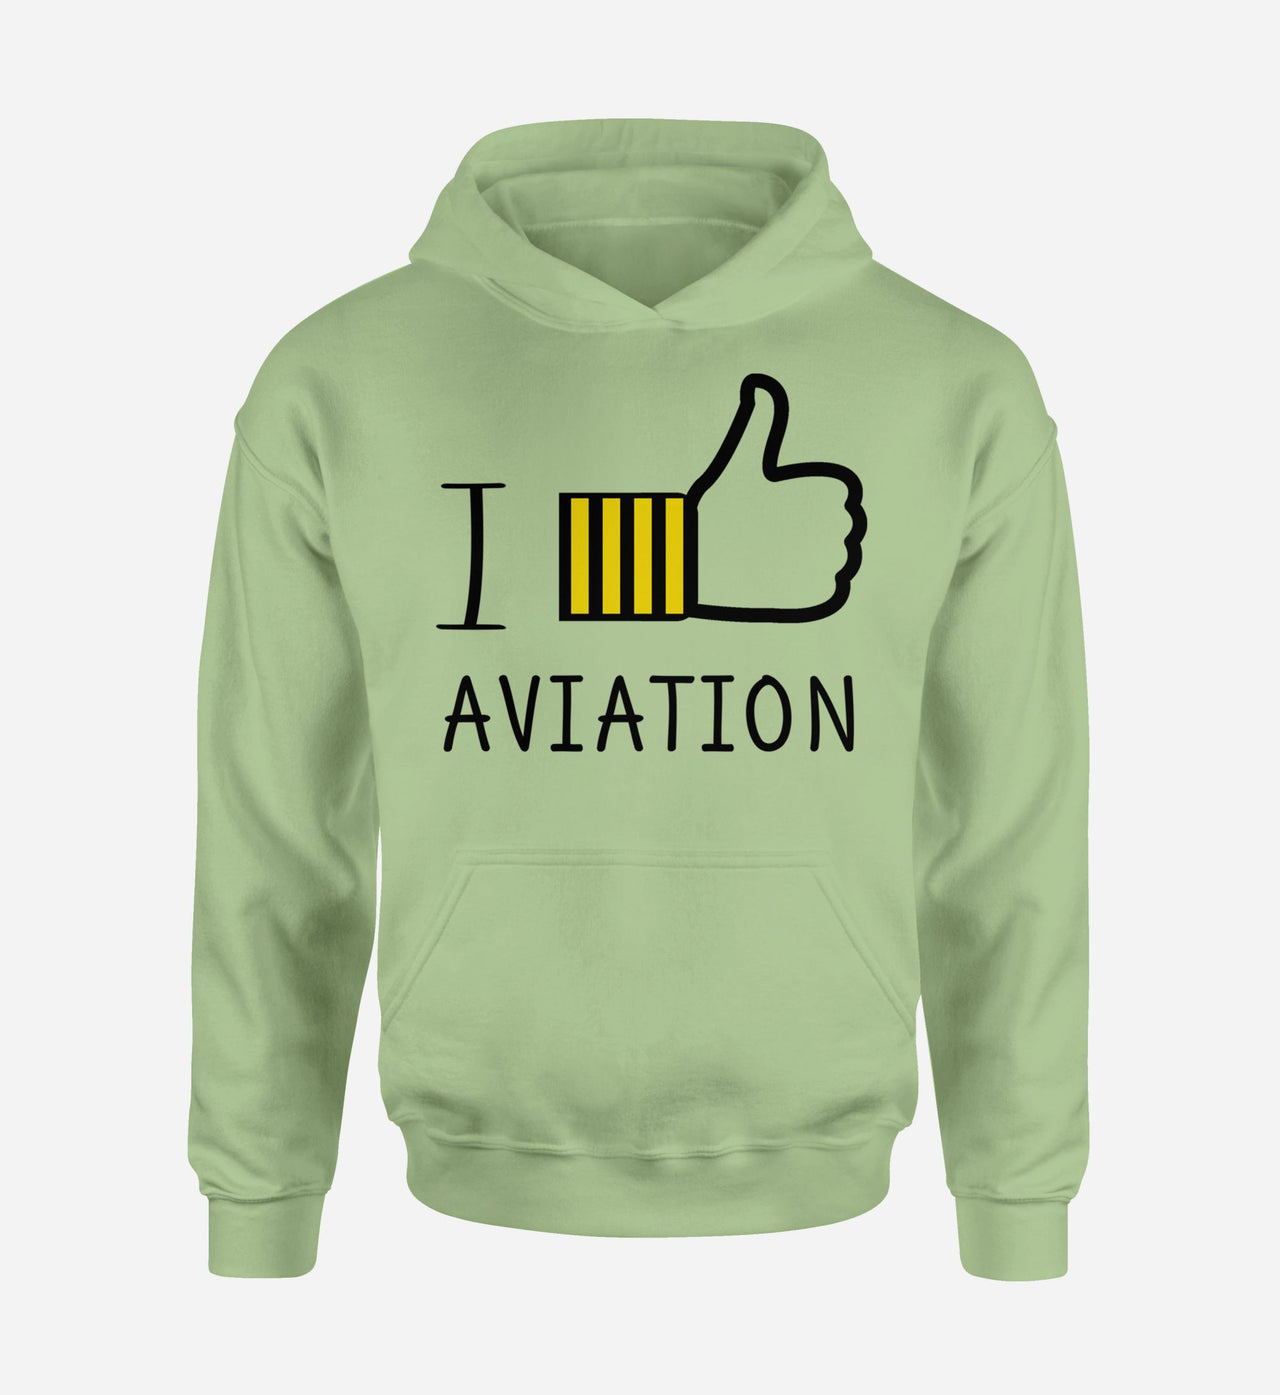 I Like Aviation Designed Hoodies